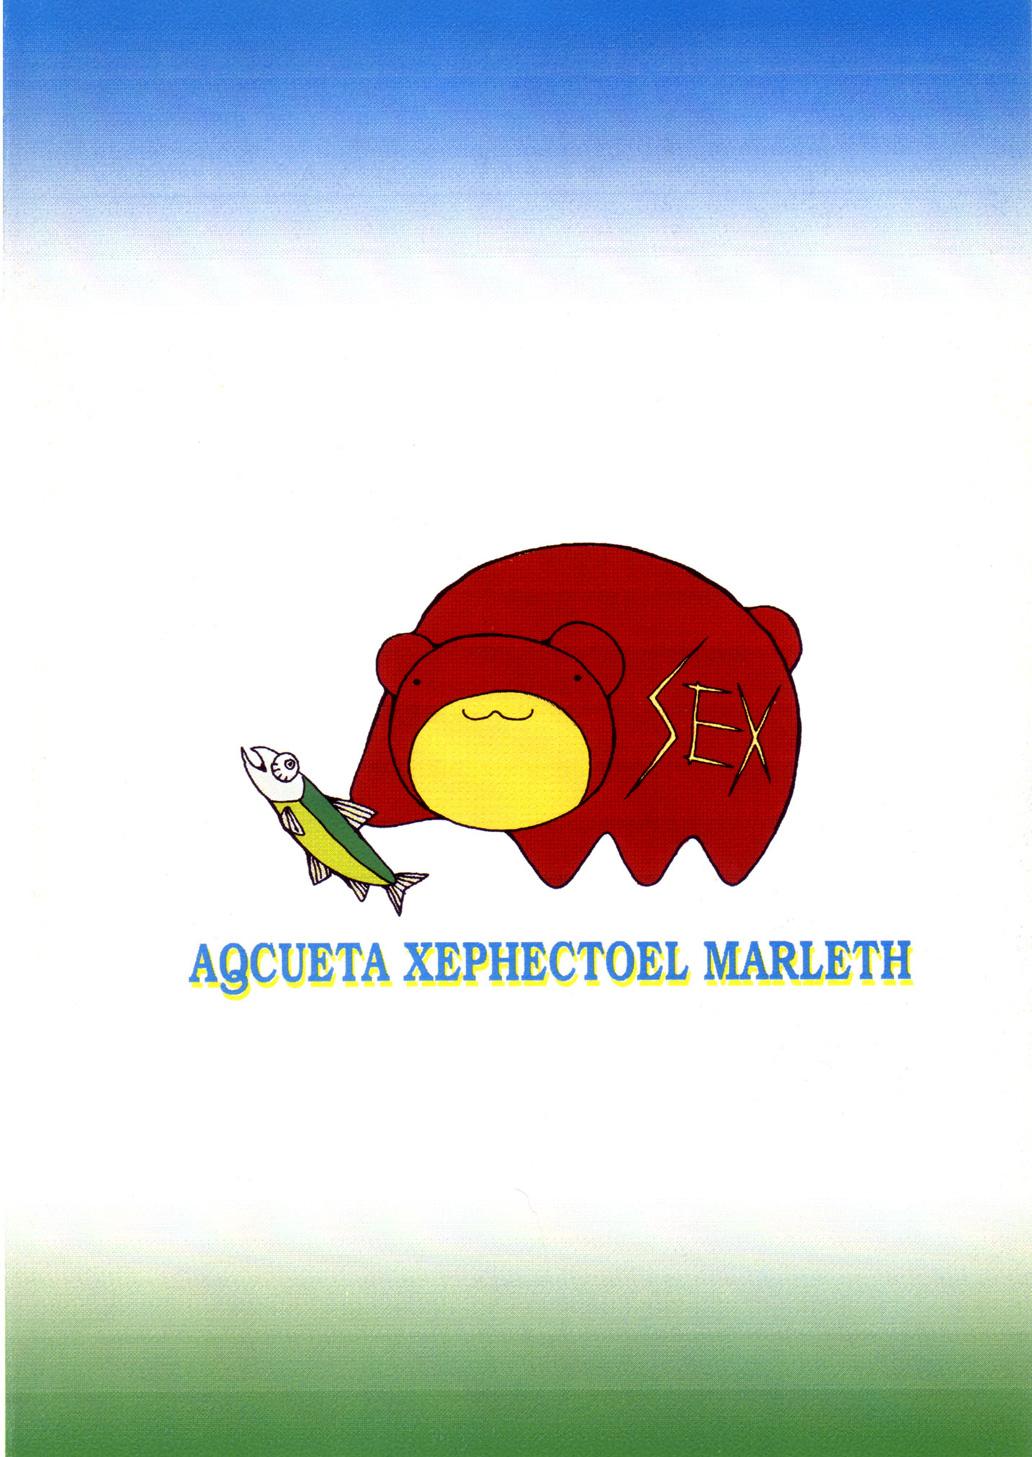 AQCUETA XEPHECTOEL MARLETH 25